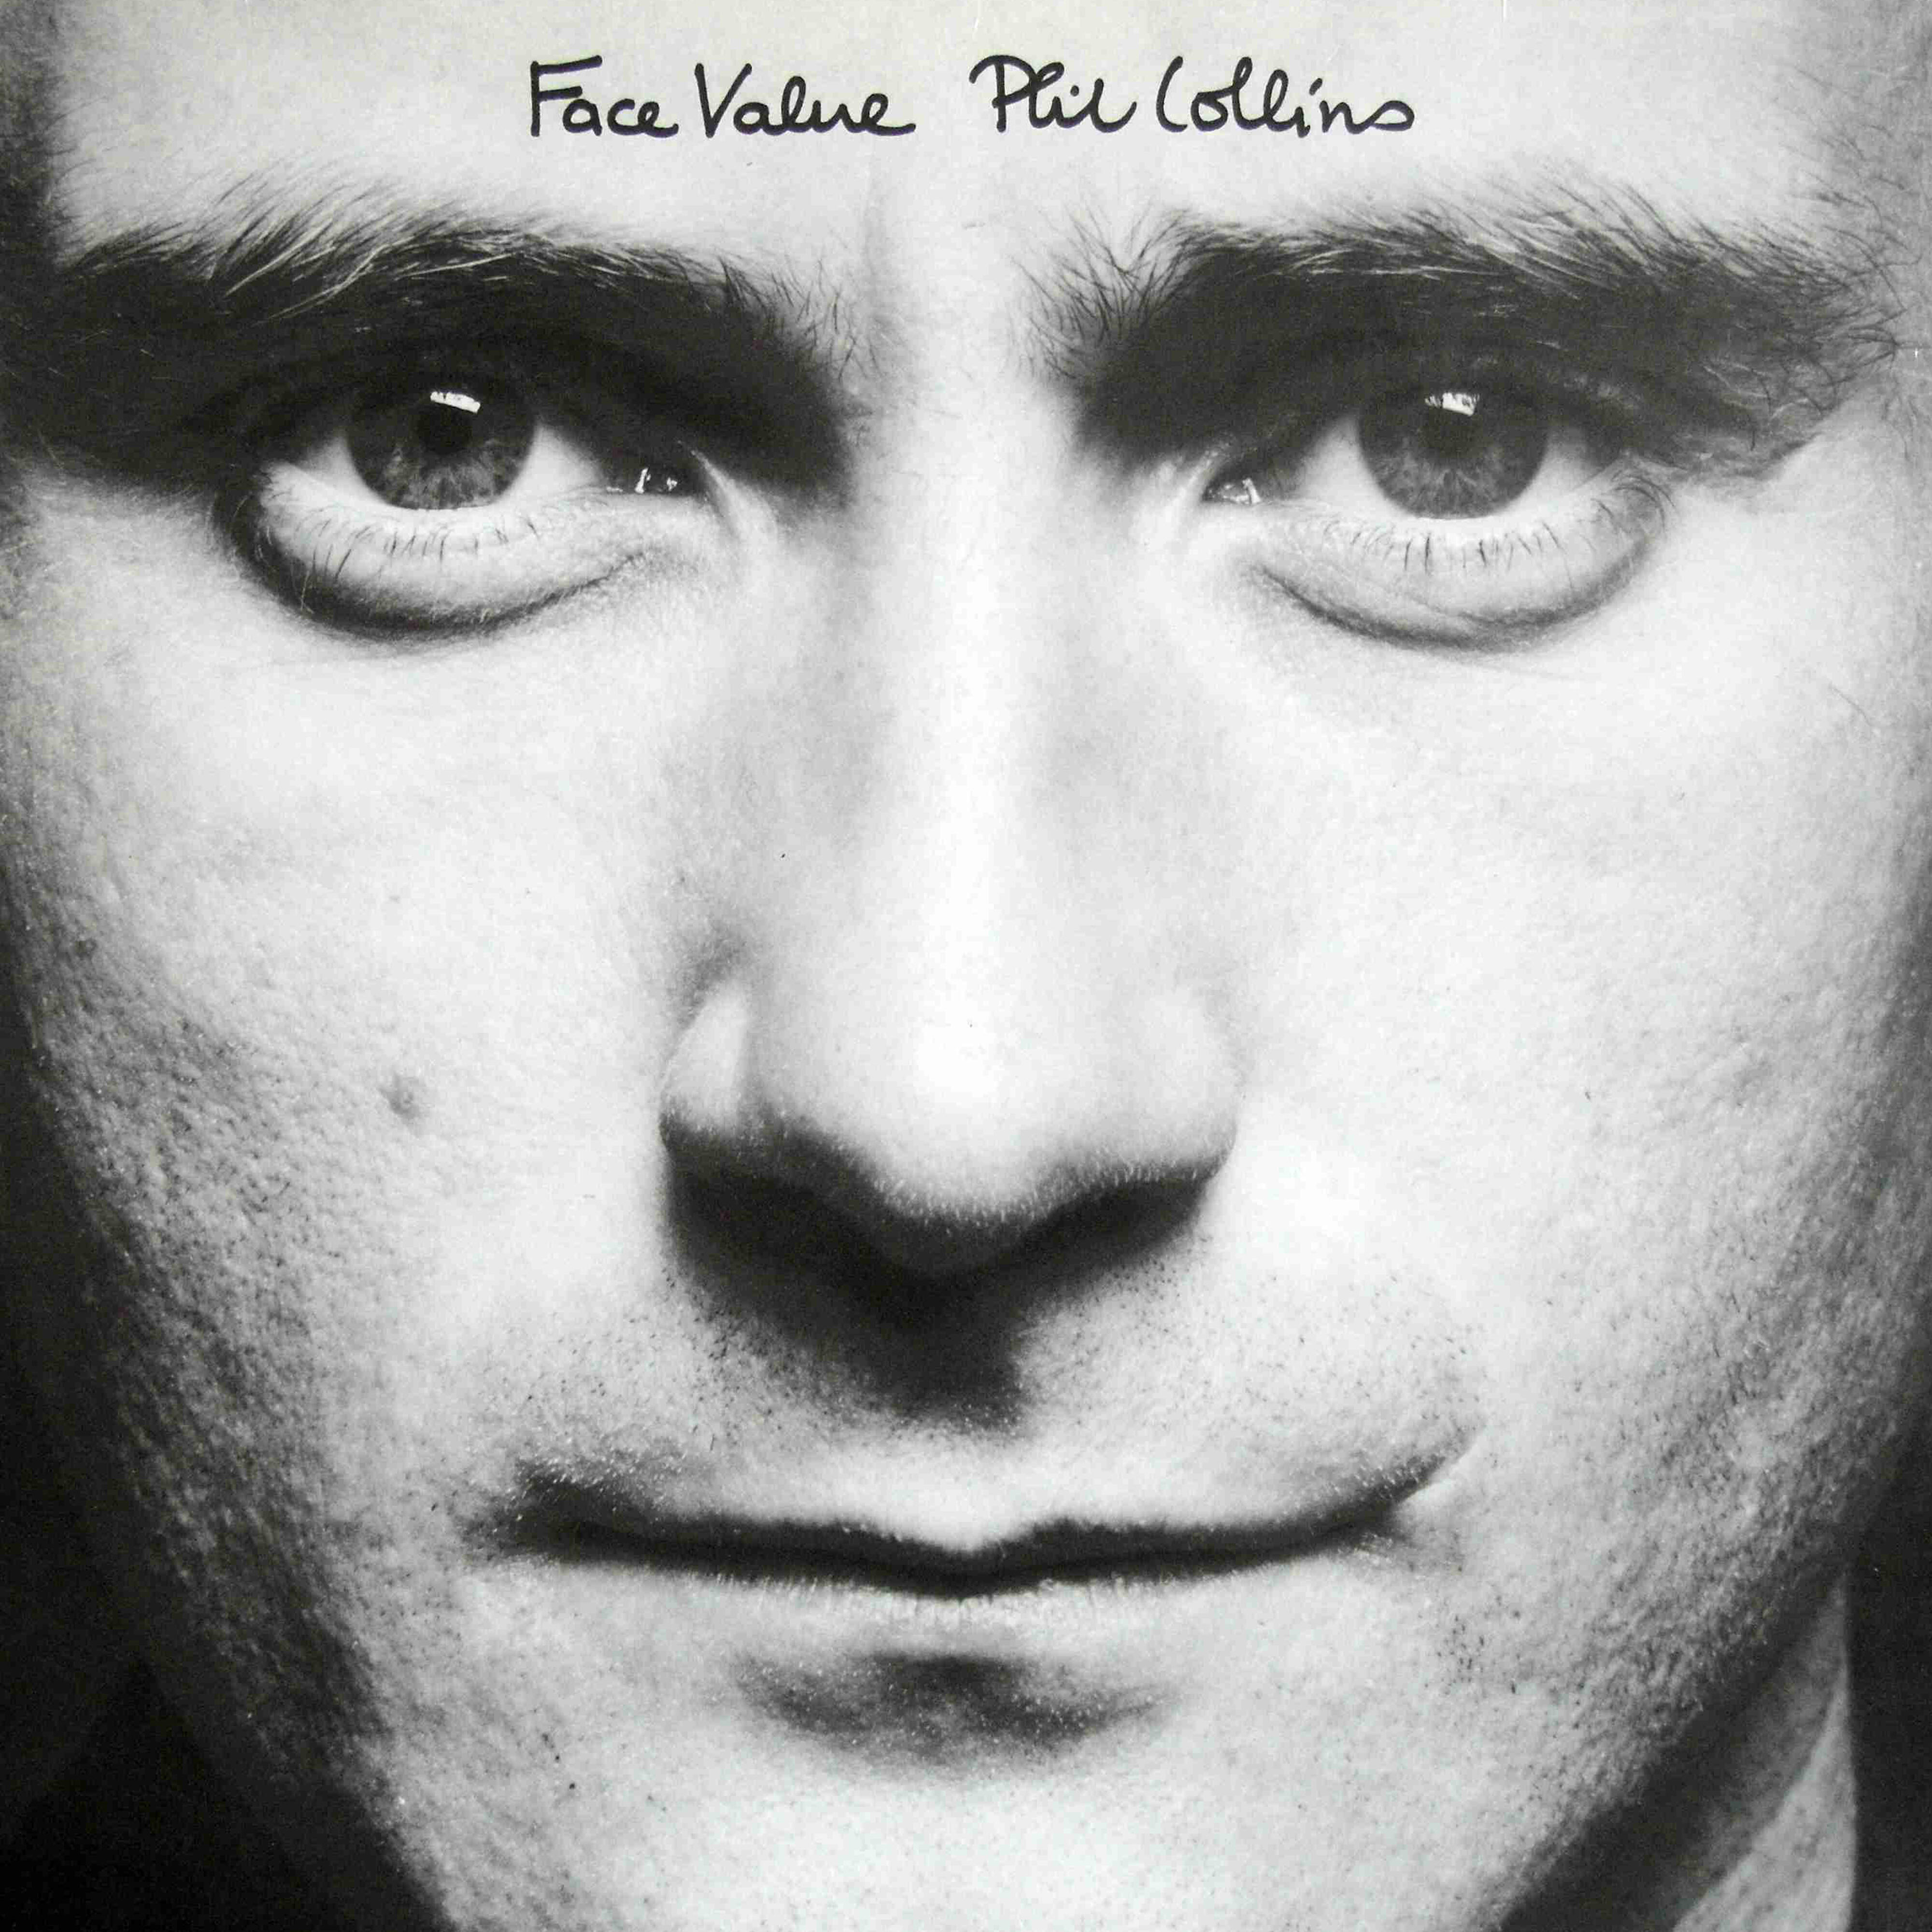 Phil Collins Face Value Iheartradio